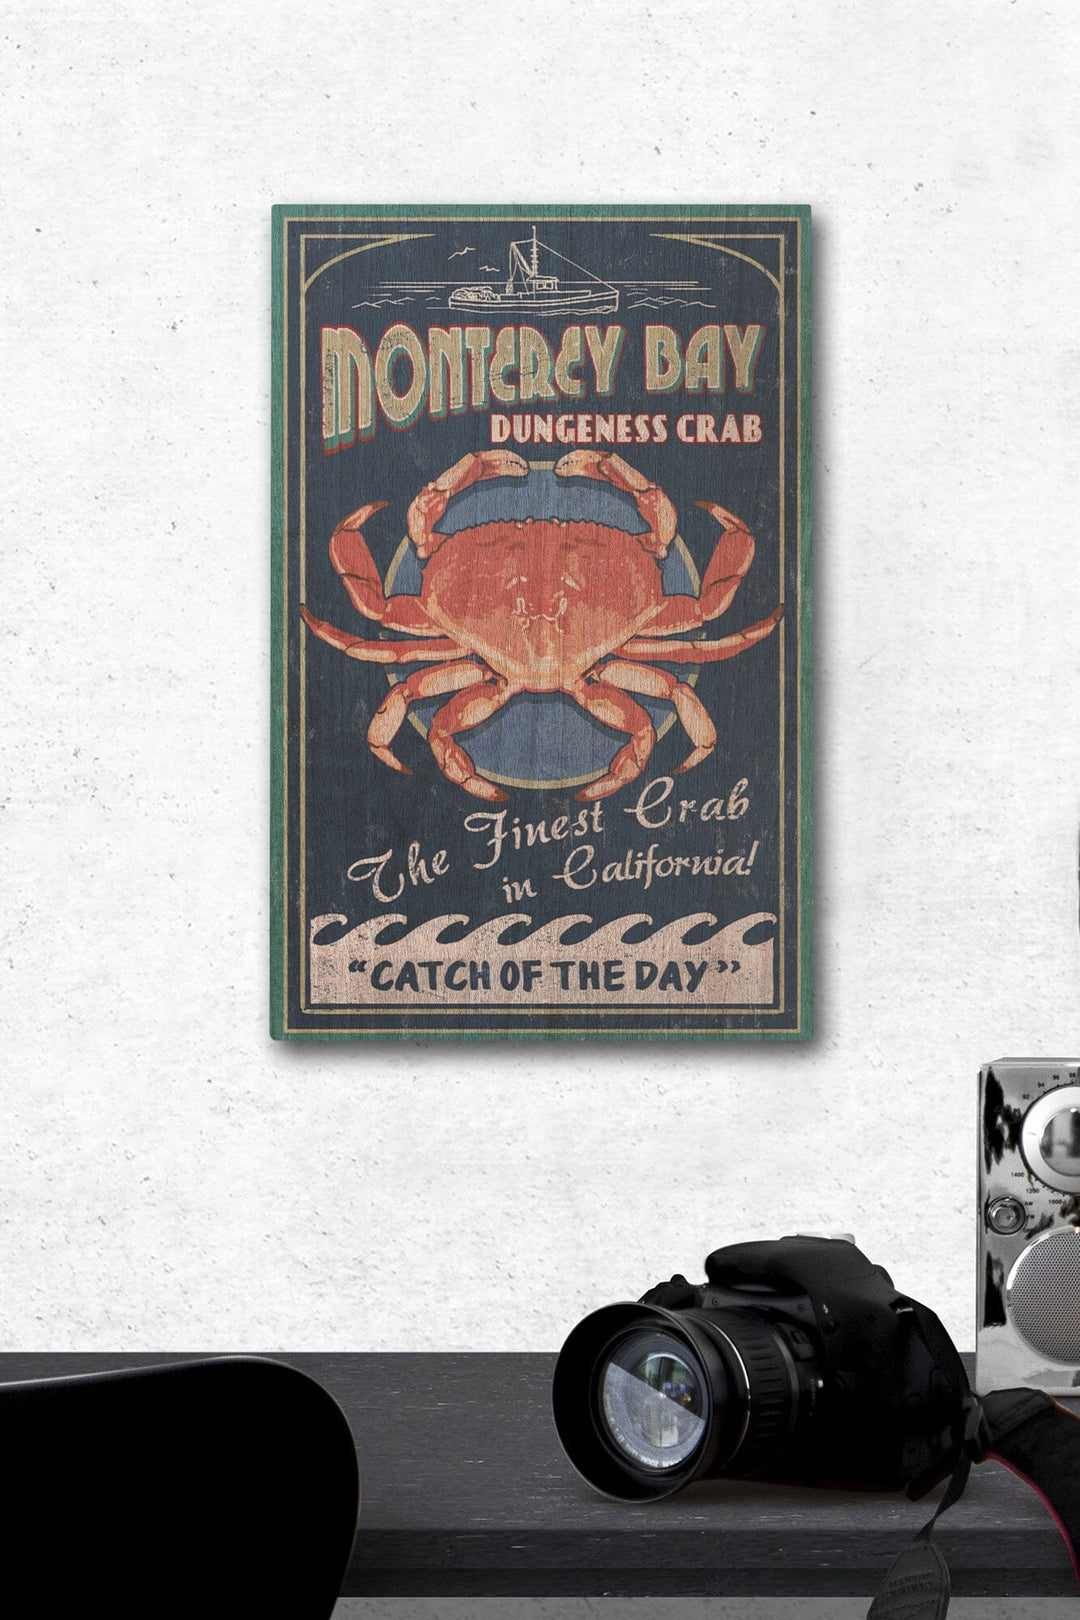 Monterey Bay, California, Dungeness Crab, Vintage Sign, Lantern Press Artwork, Wood Signs and Postcards Wood Lantern Press 12 x 18 Wood Gallery Print 